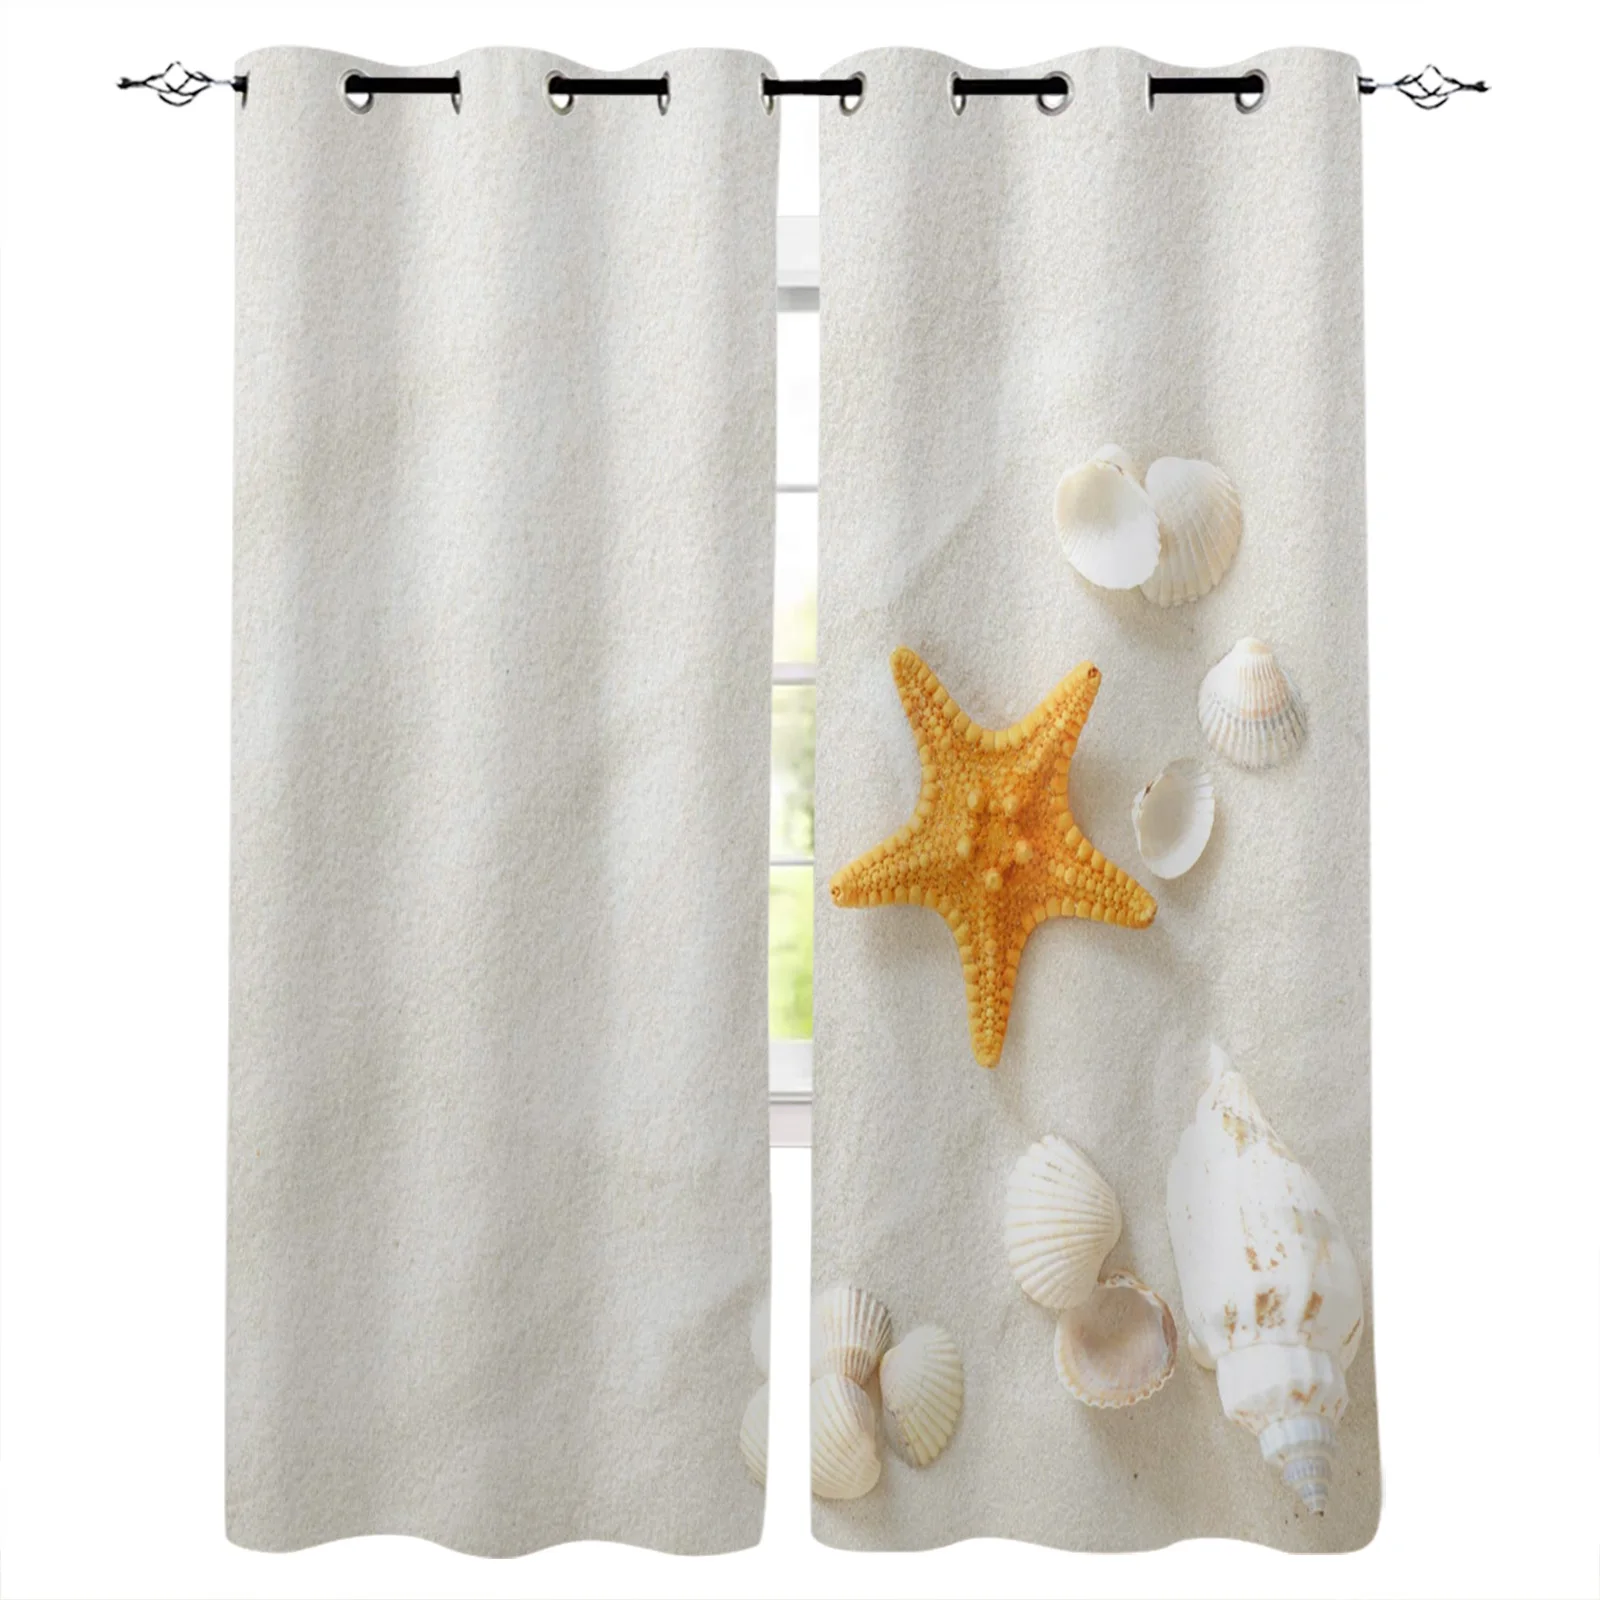 

Seashells Conch Starfish Beach Sand Blackout Curtains Window Curtains for Bedroom Living Room Decor Window Treatments